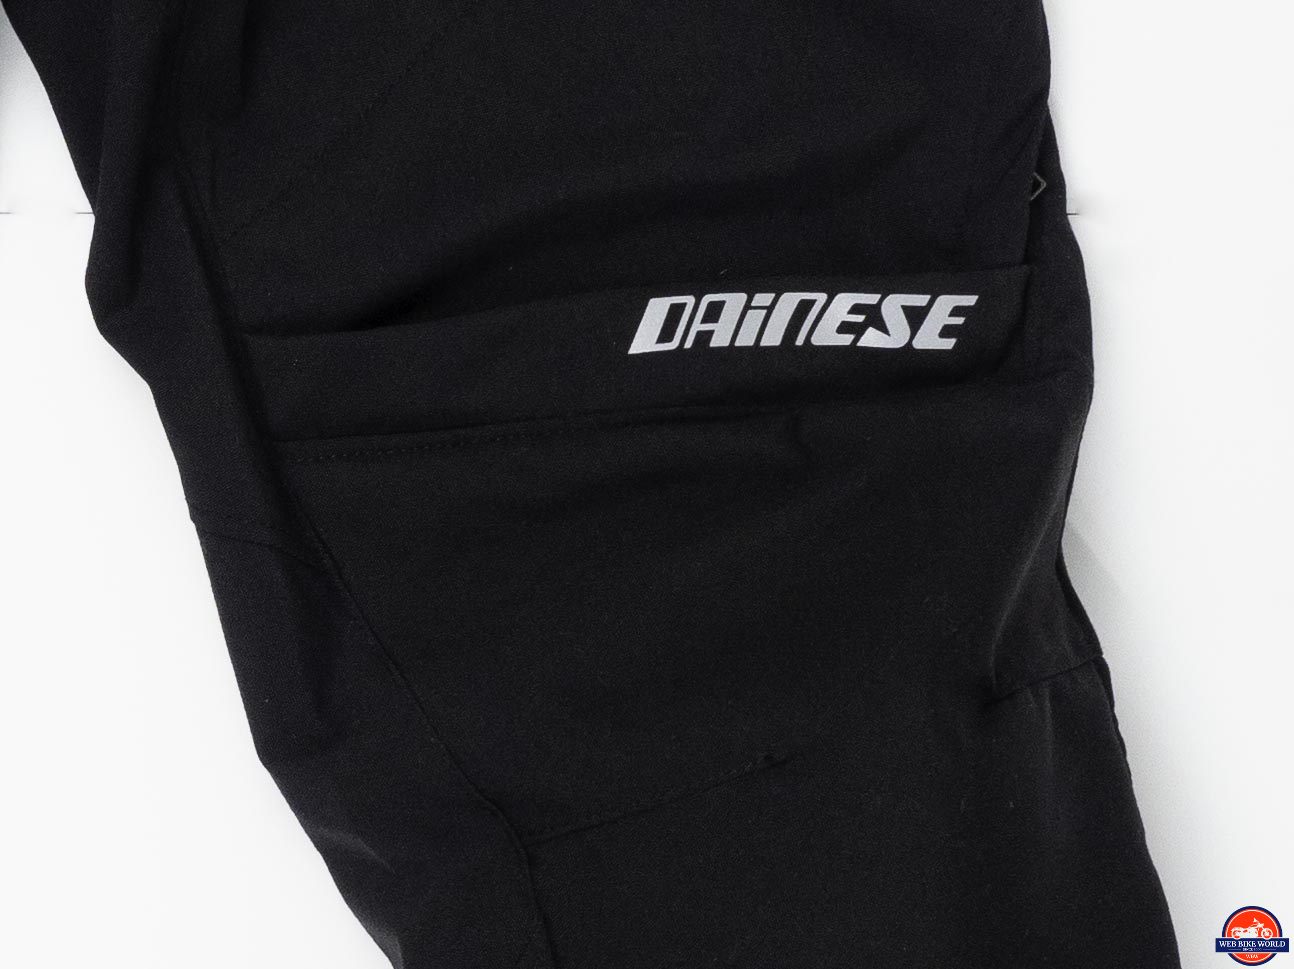 Dainese New Drake Air Textile Pants Review – WebBikeWorld